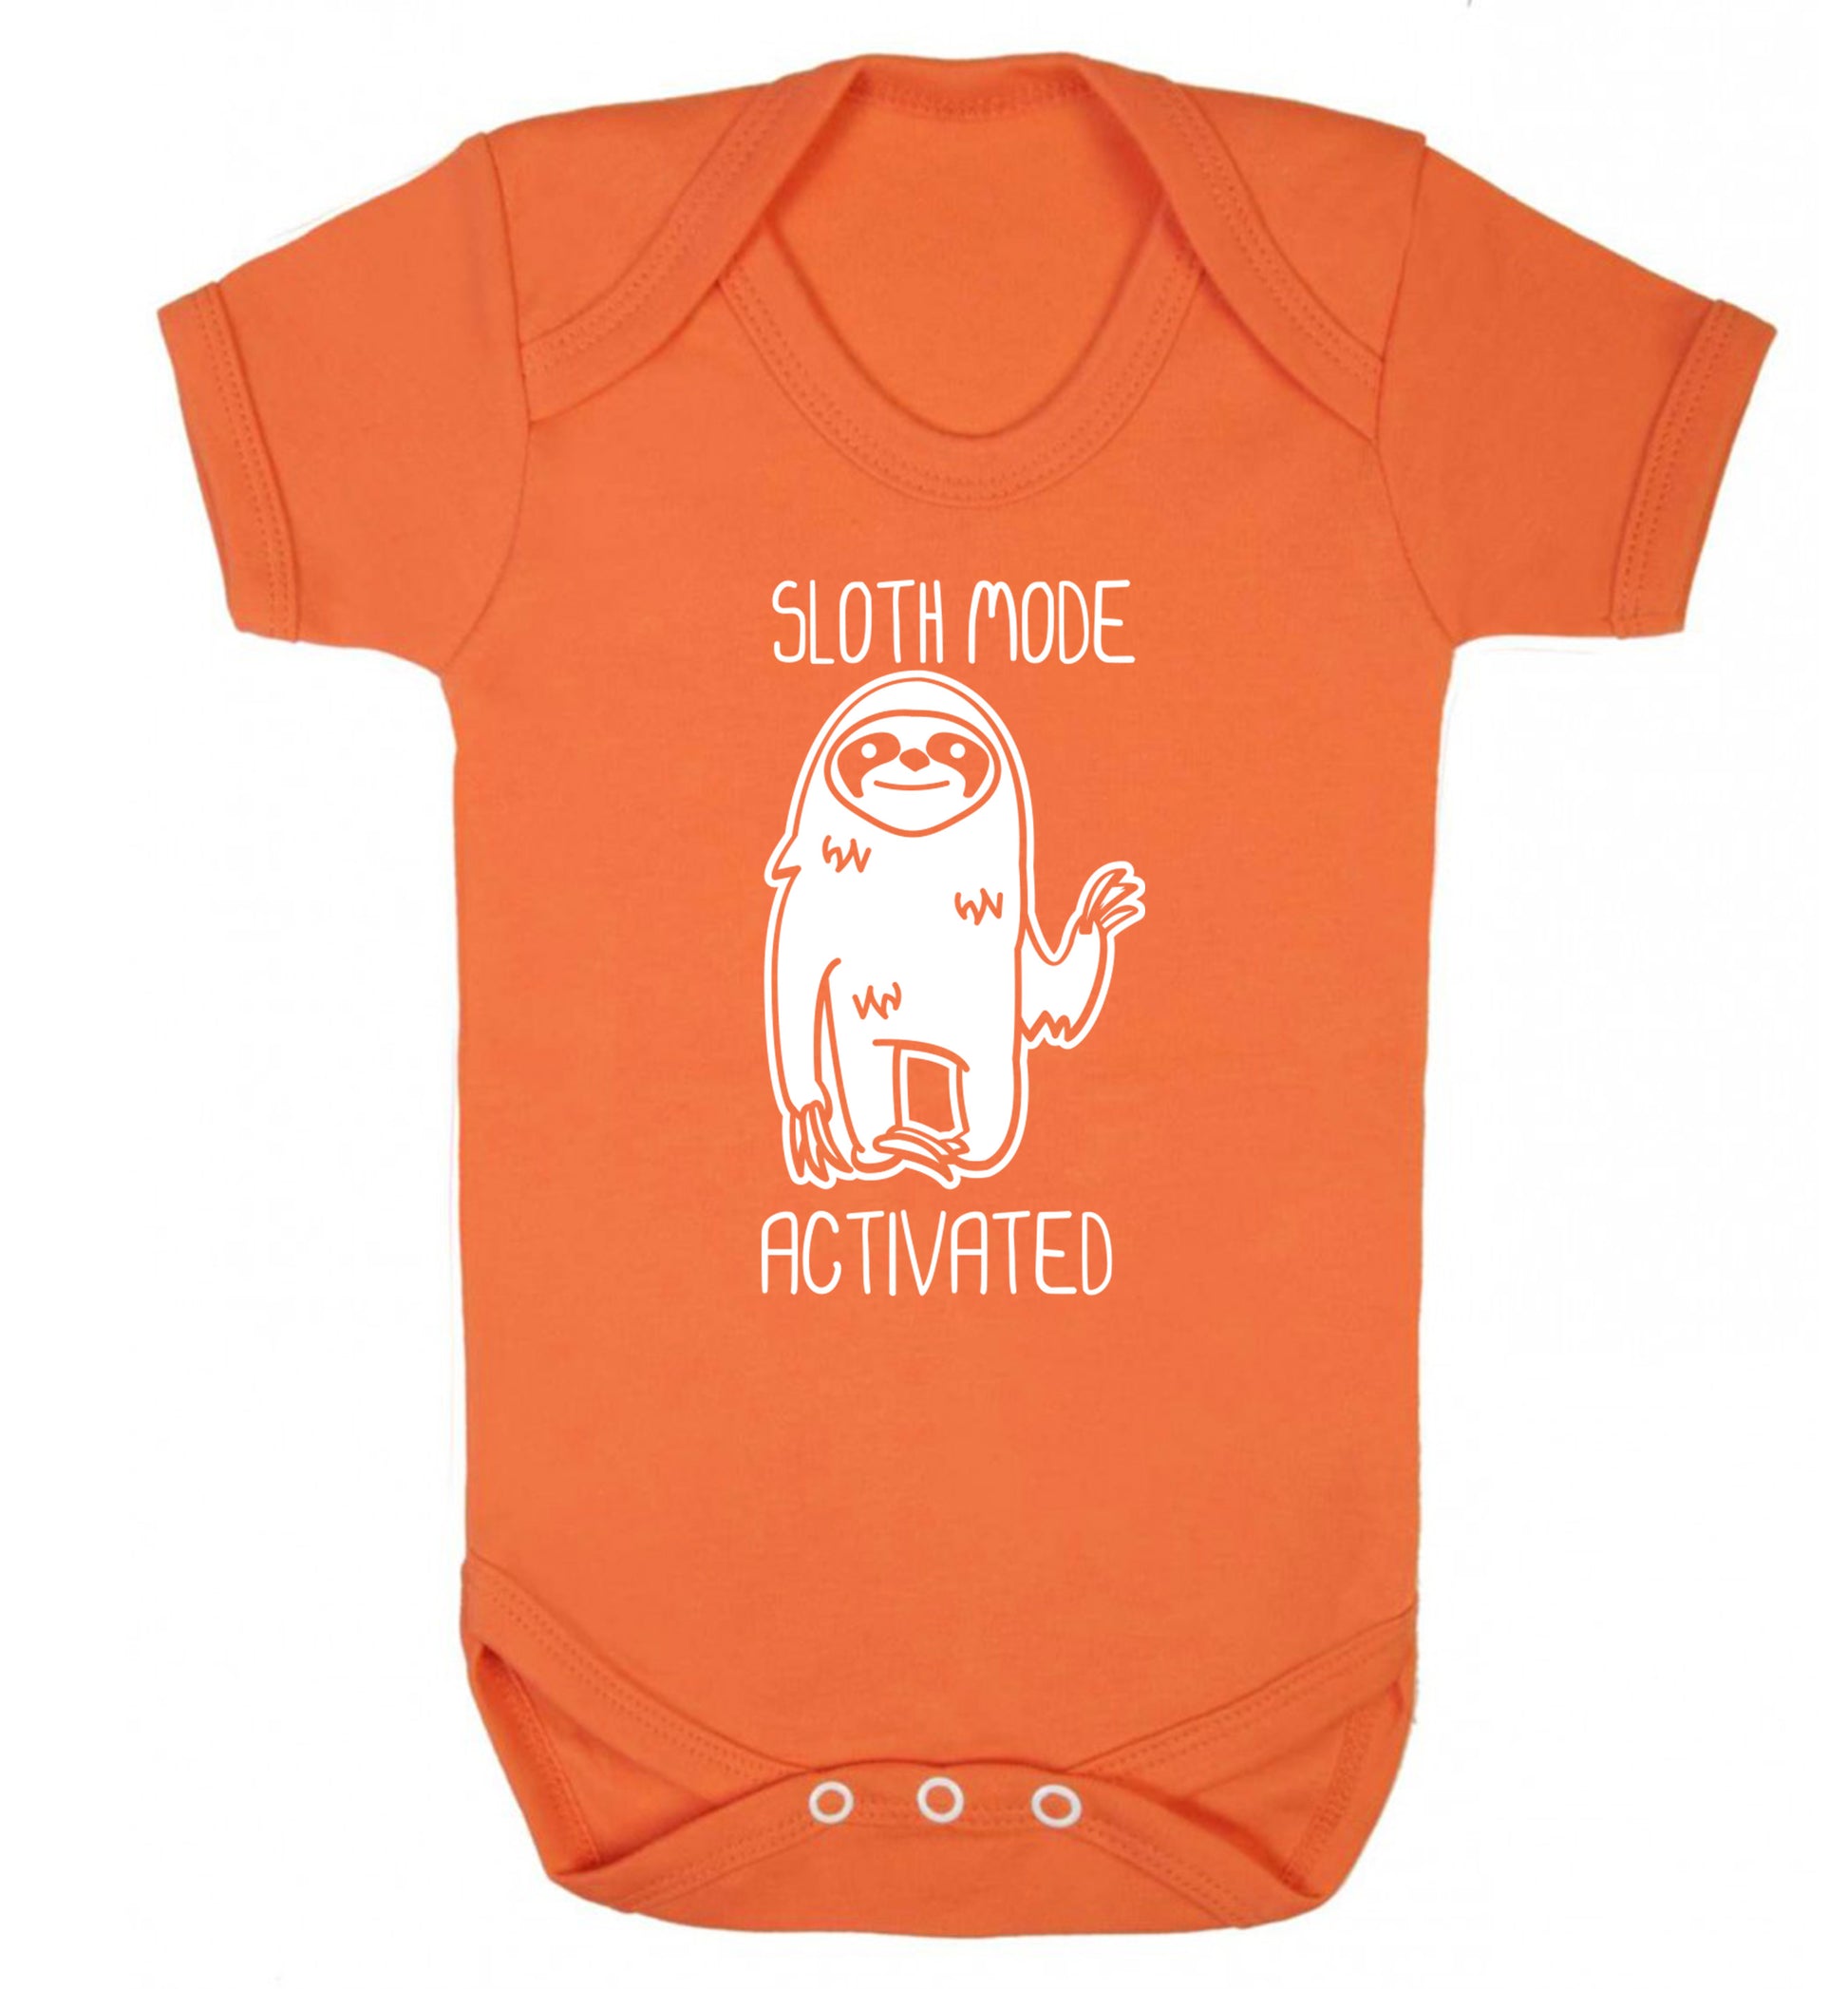 Sloth mode acitvated Baby Vest orange 18-24 months